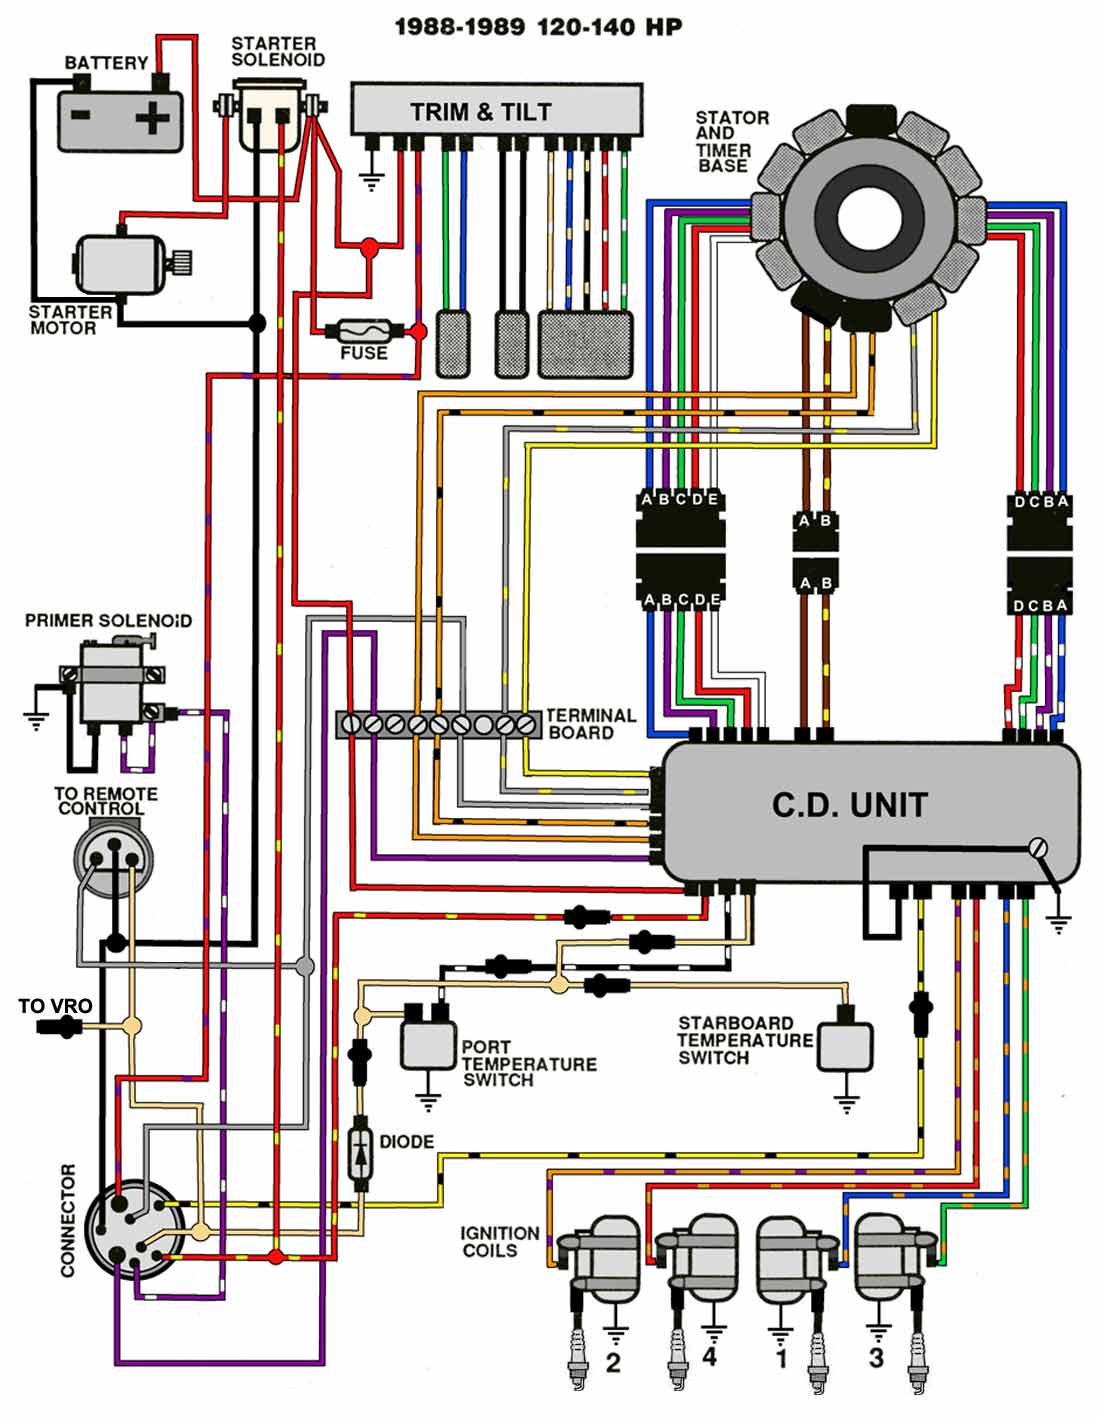 http://www.maxrules.com/graphics/omc...89_120_140.jpg 1988 diagram wiring evinrude be120tlcca 